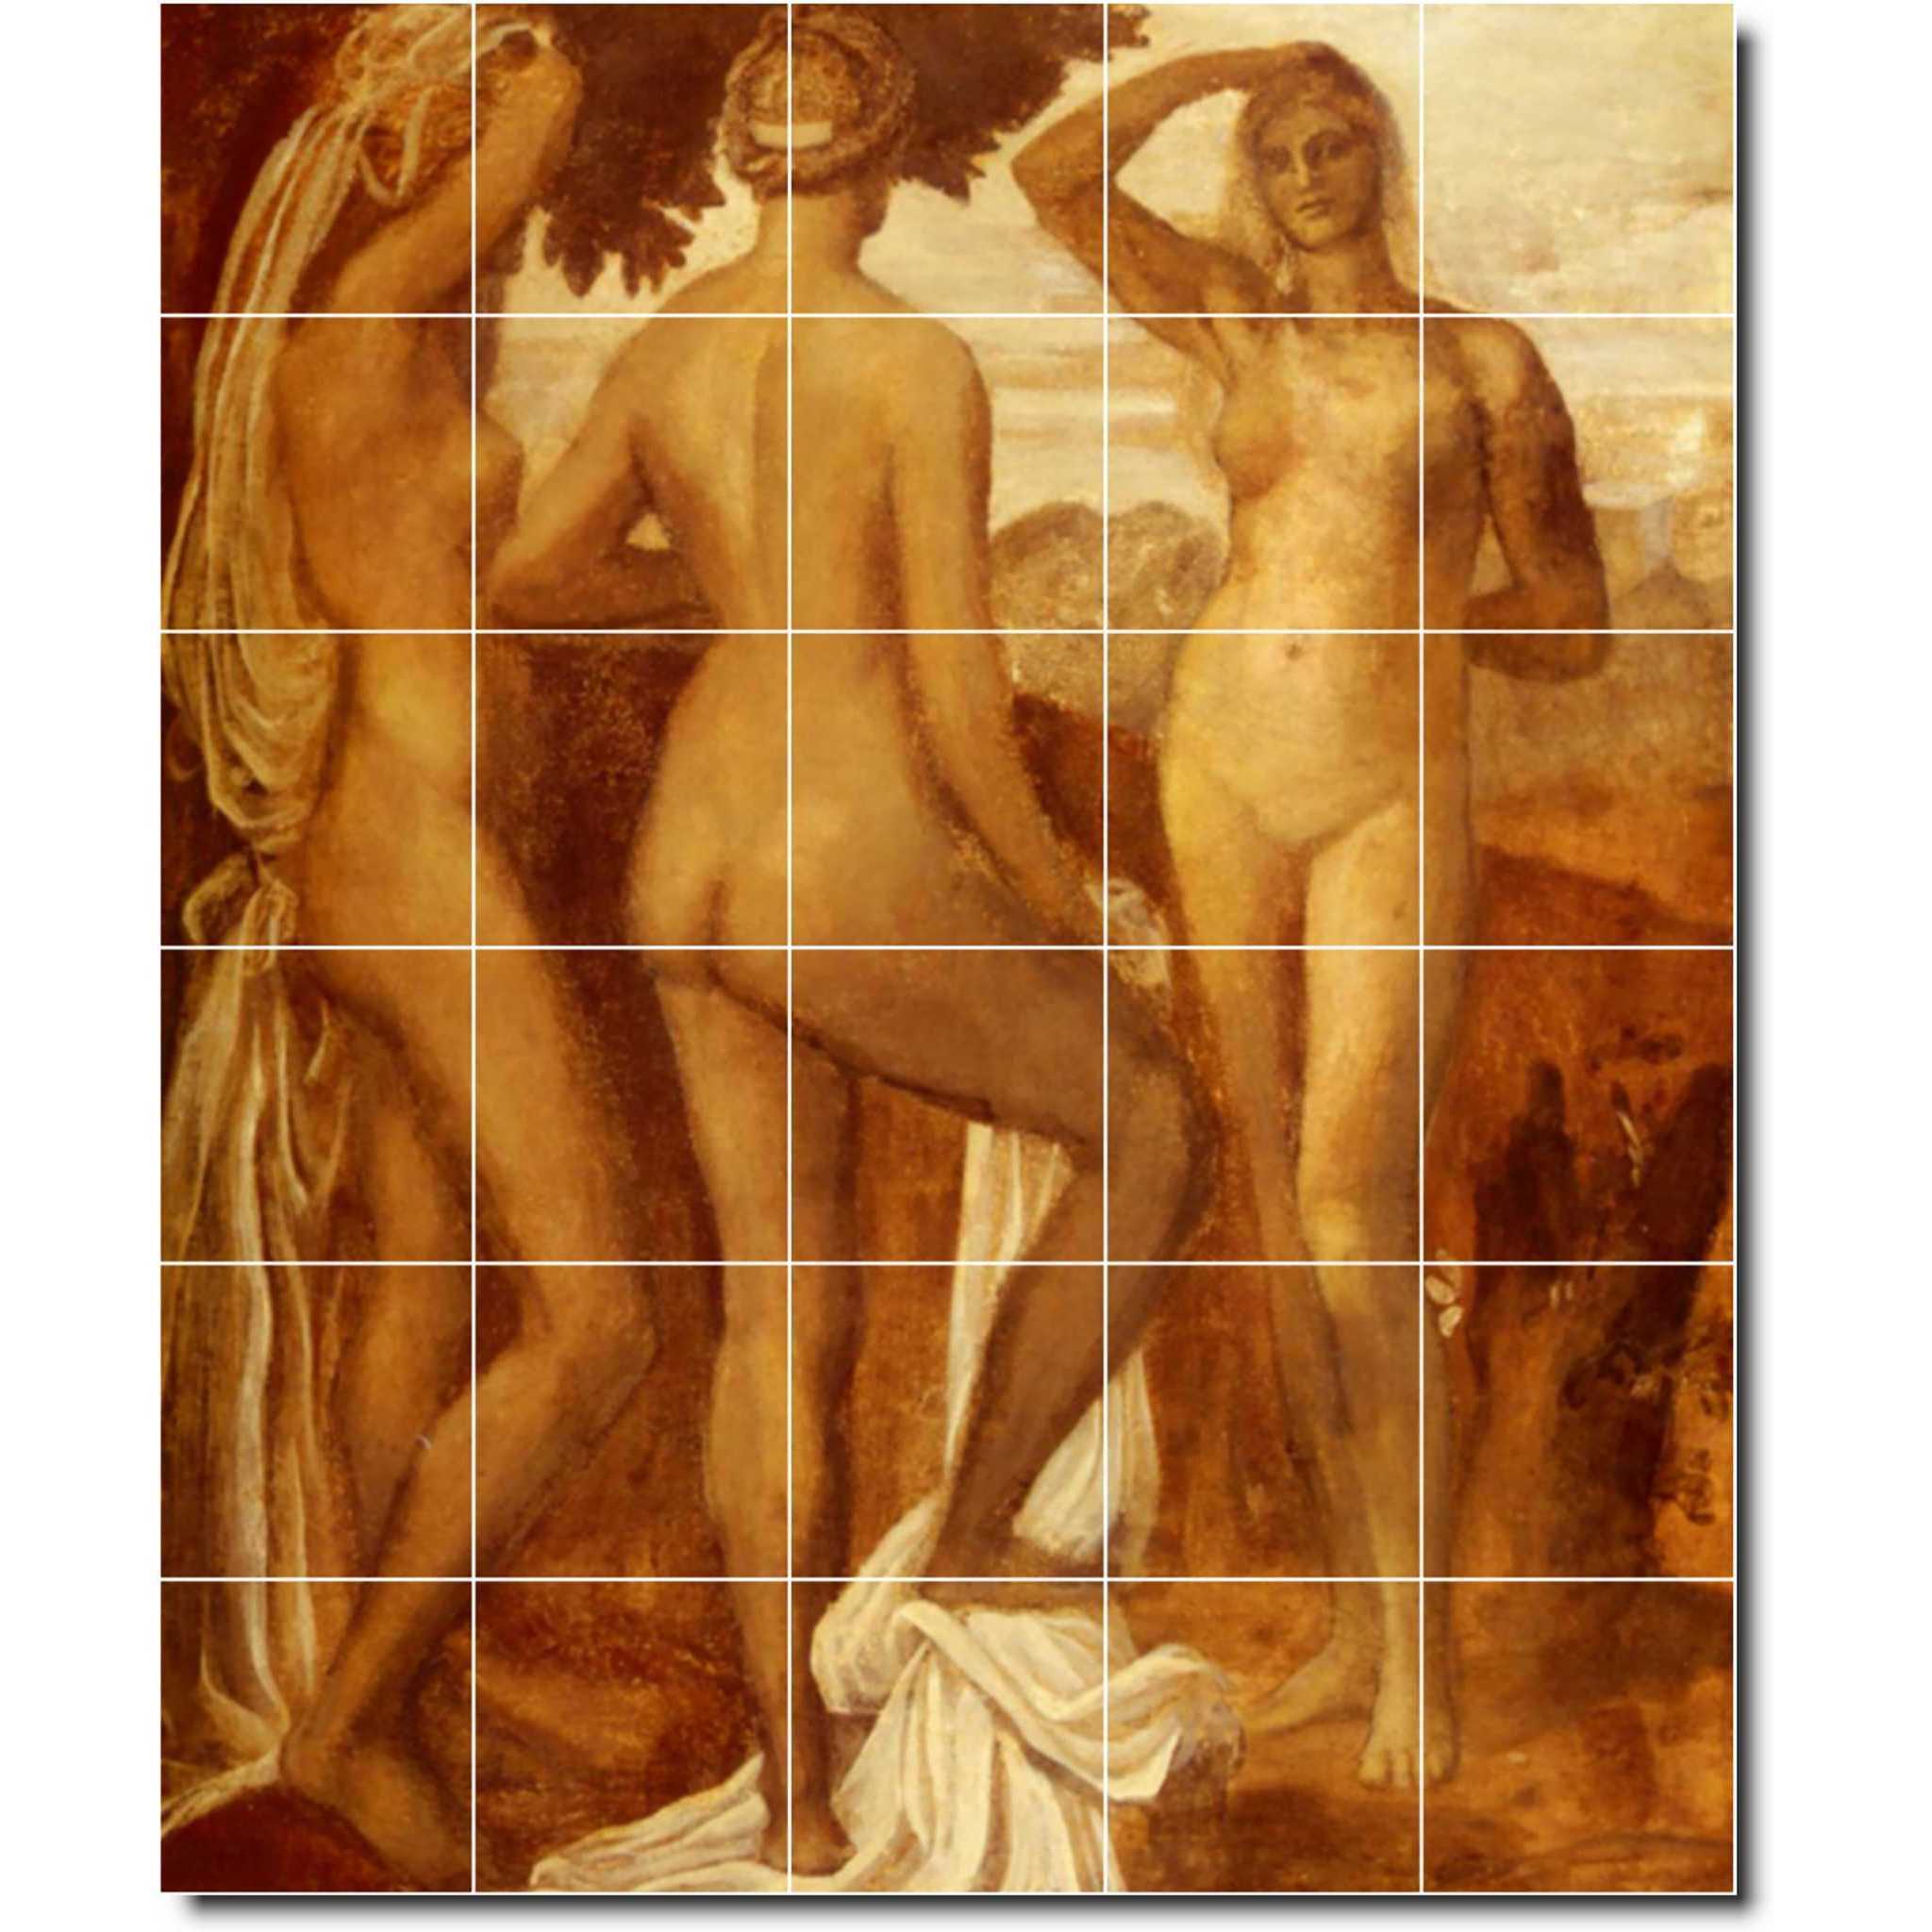 george watts nude painting ceramic tile mural p09535